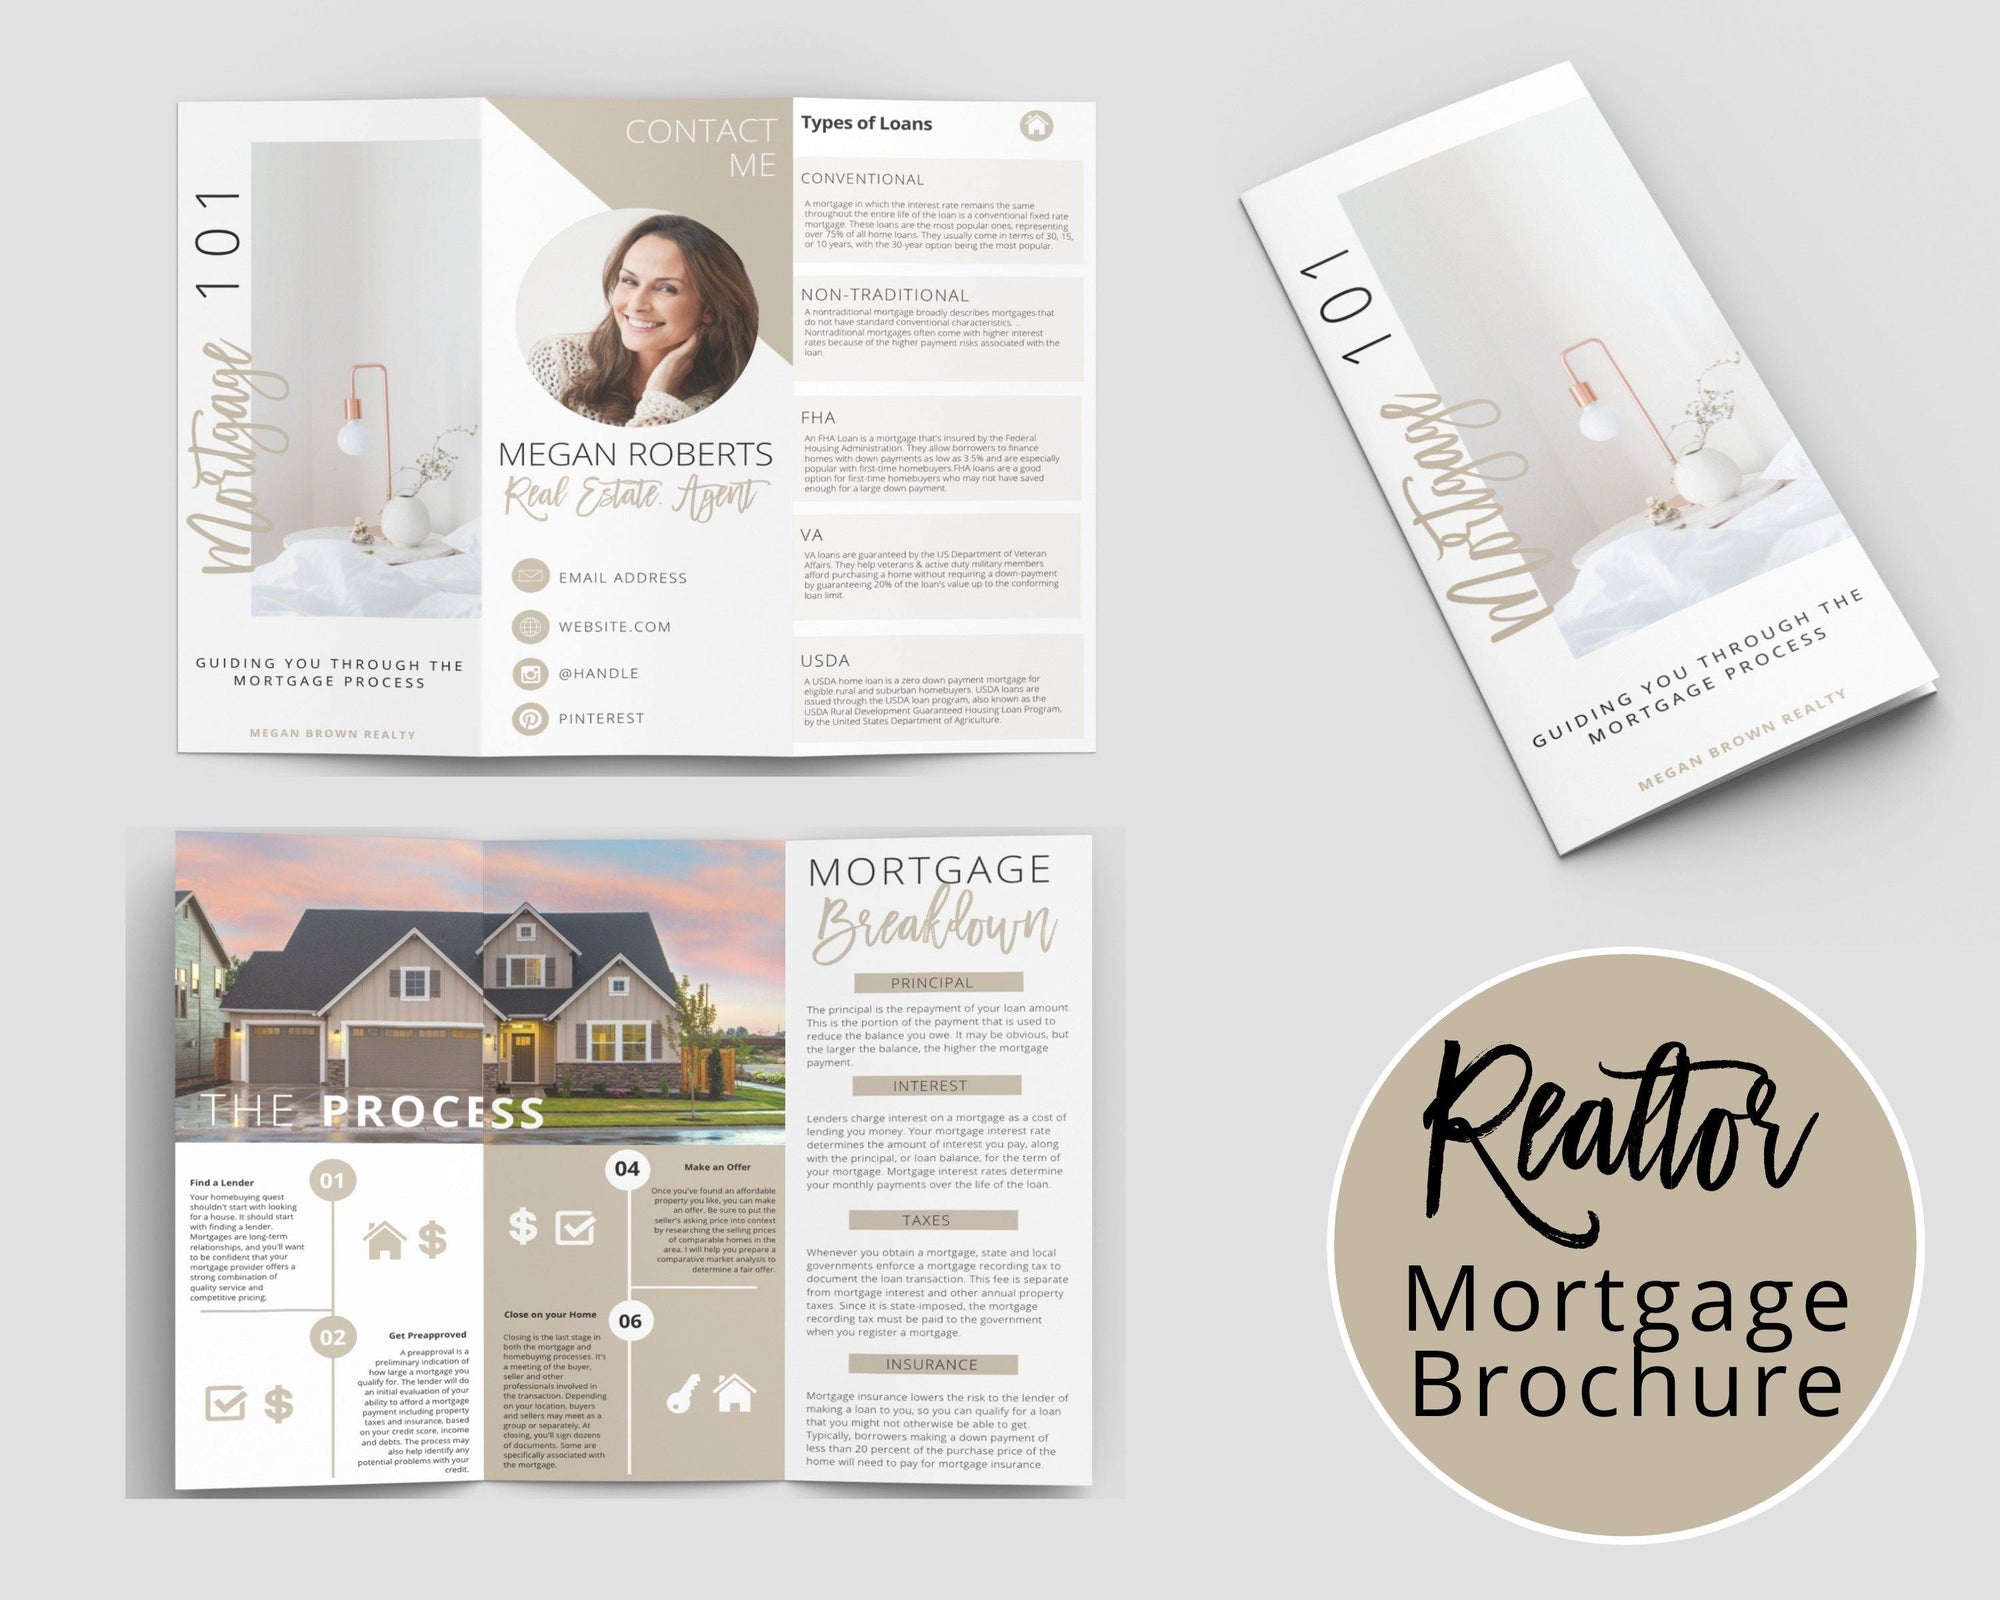 Real Estate Mortgage Brochure - Real Estate Templates Co